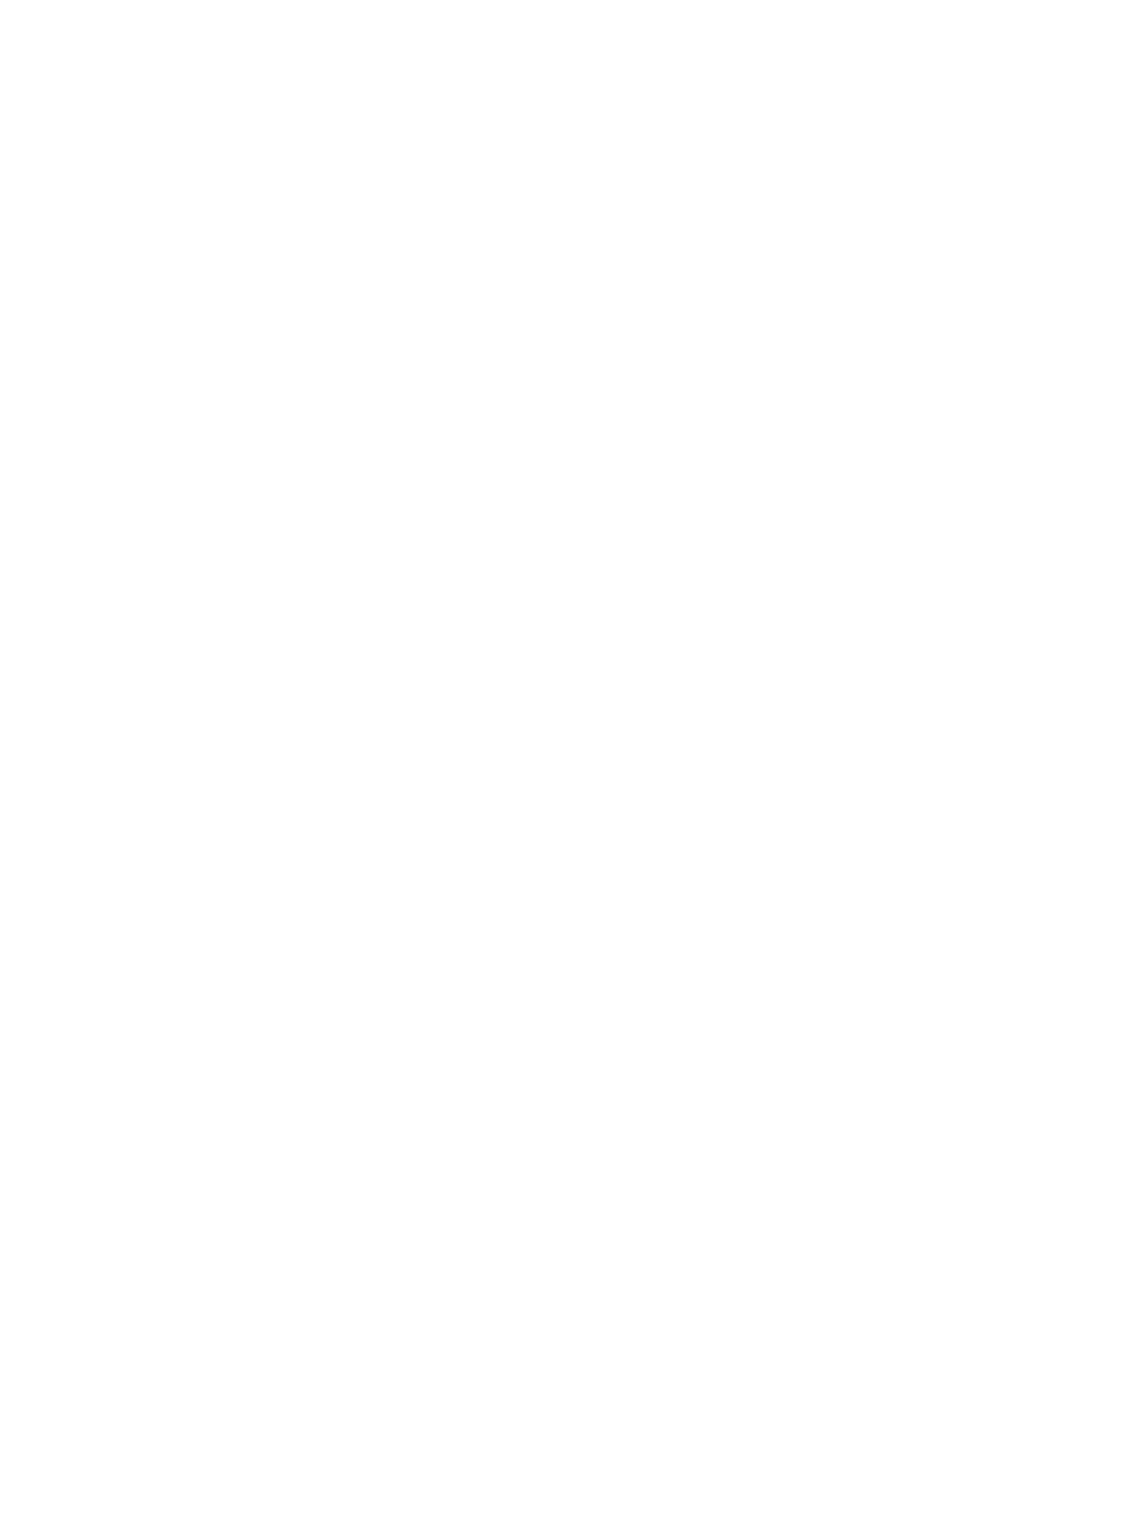 Ashmore Group logo pour fonds sombres (PNG transparent)